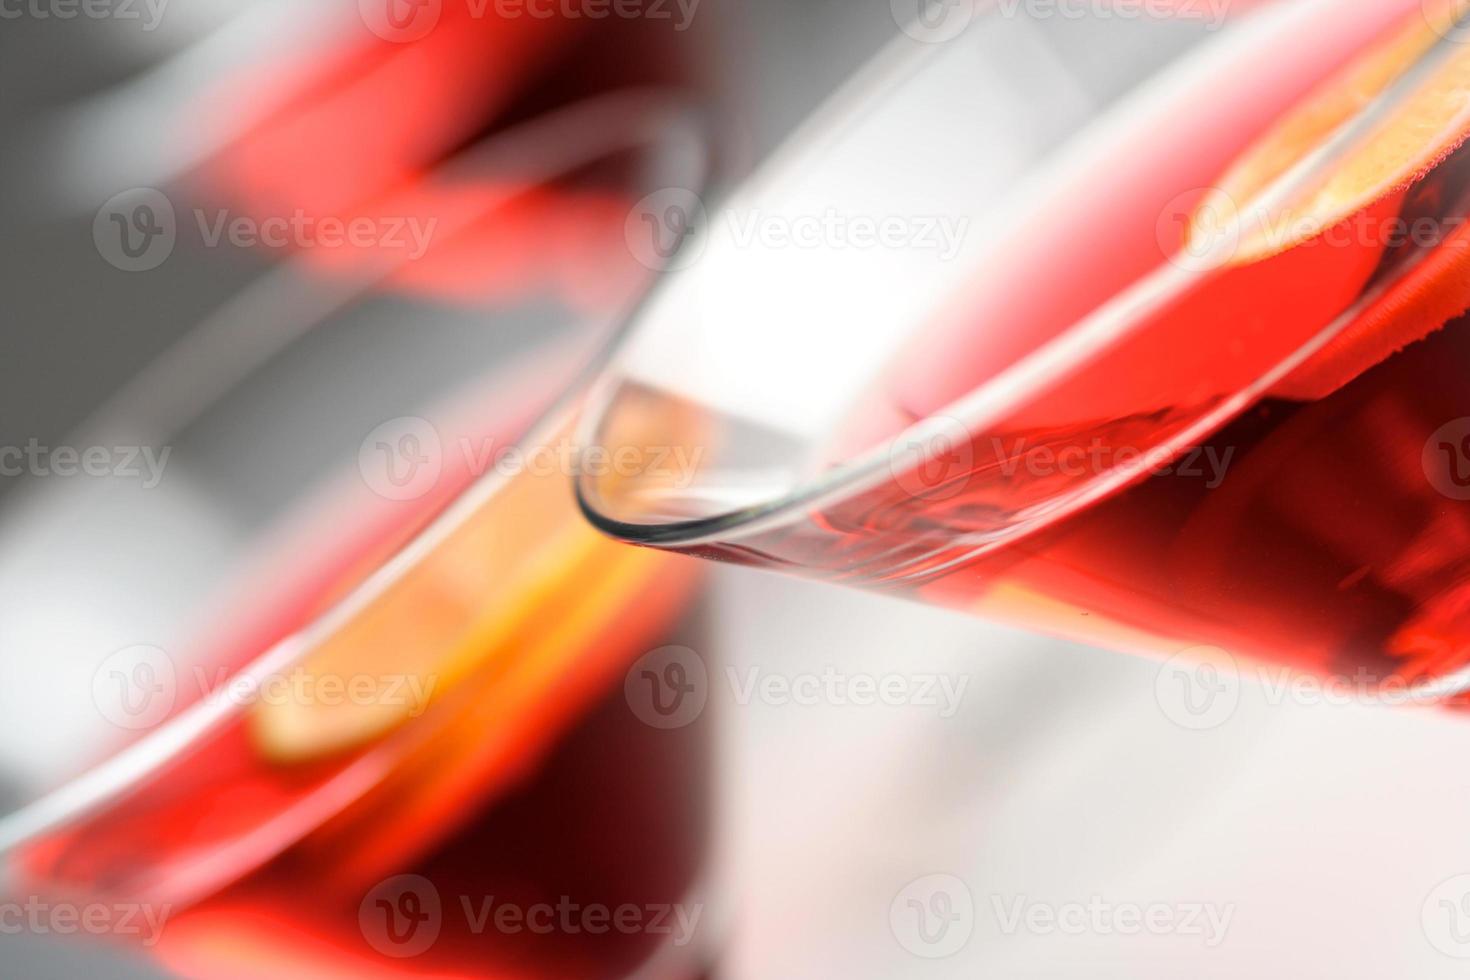 Studio shot of drink in martini glass photo